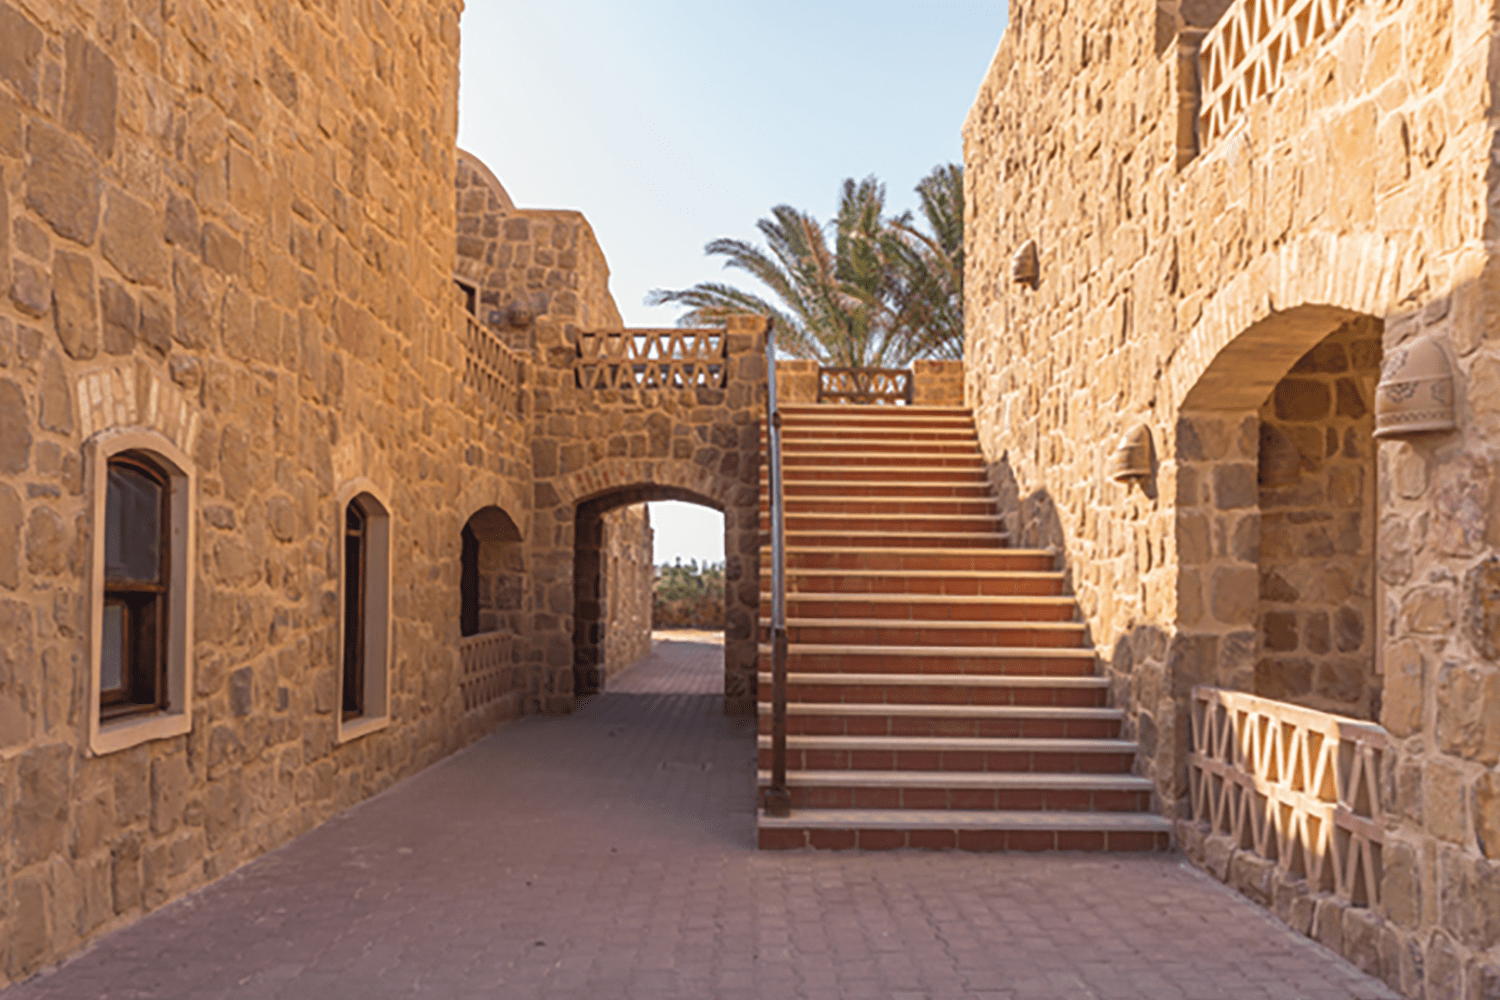 Movenpick Resort El Quseir - El Quseir | Ancient Egypt & The Red Sea Tour | The Magic of Jordan & Egypt Tour